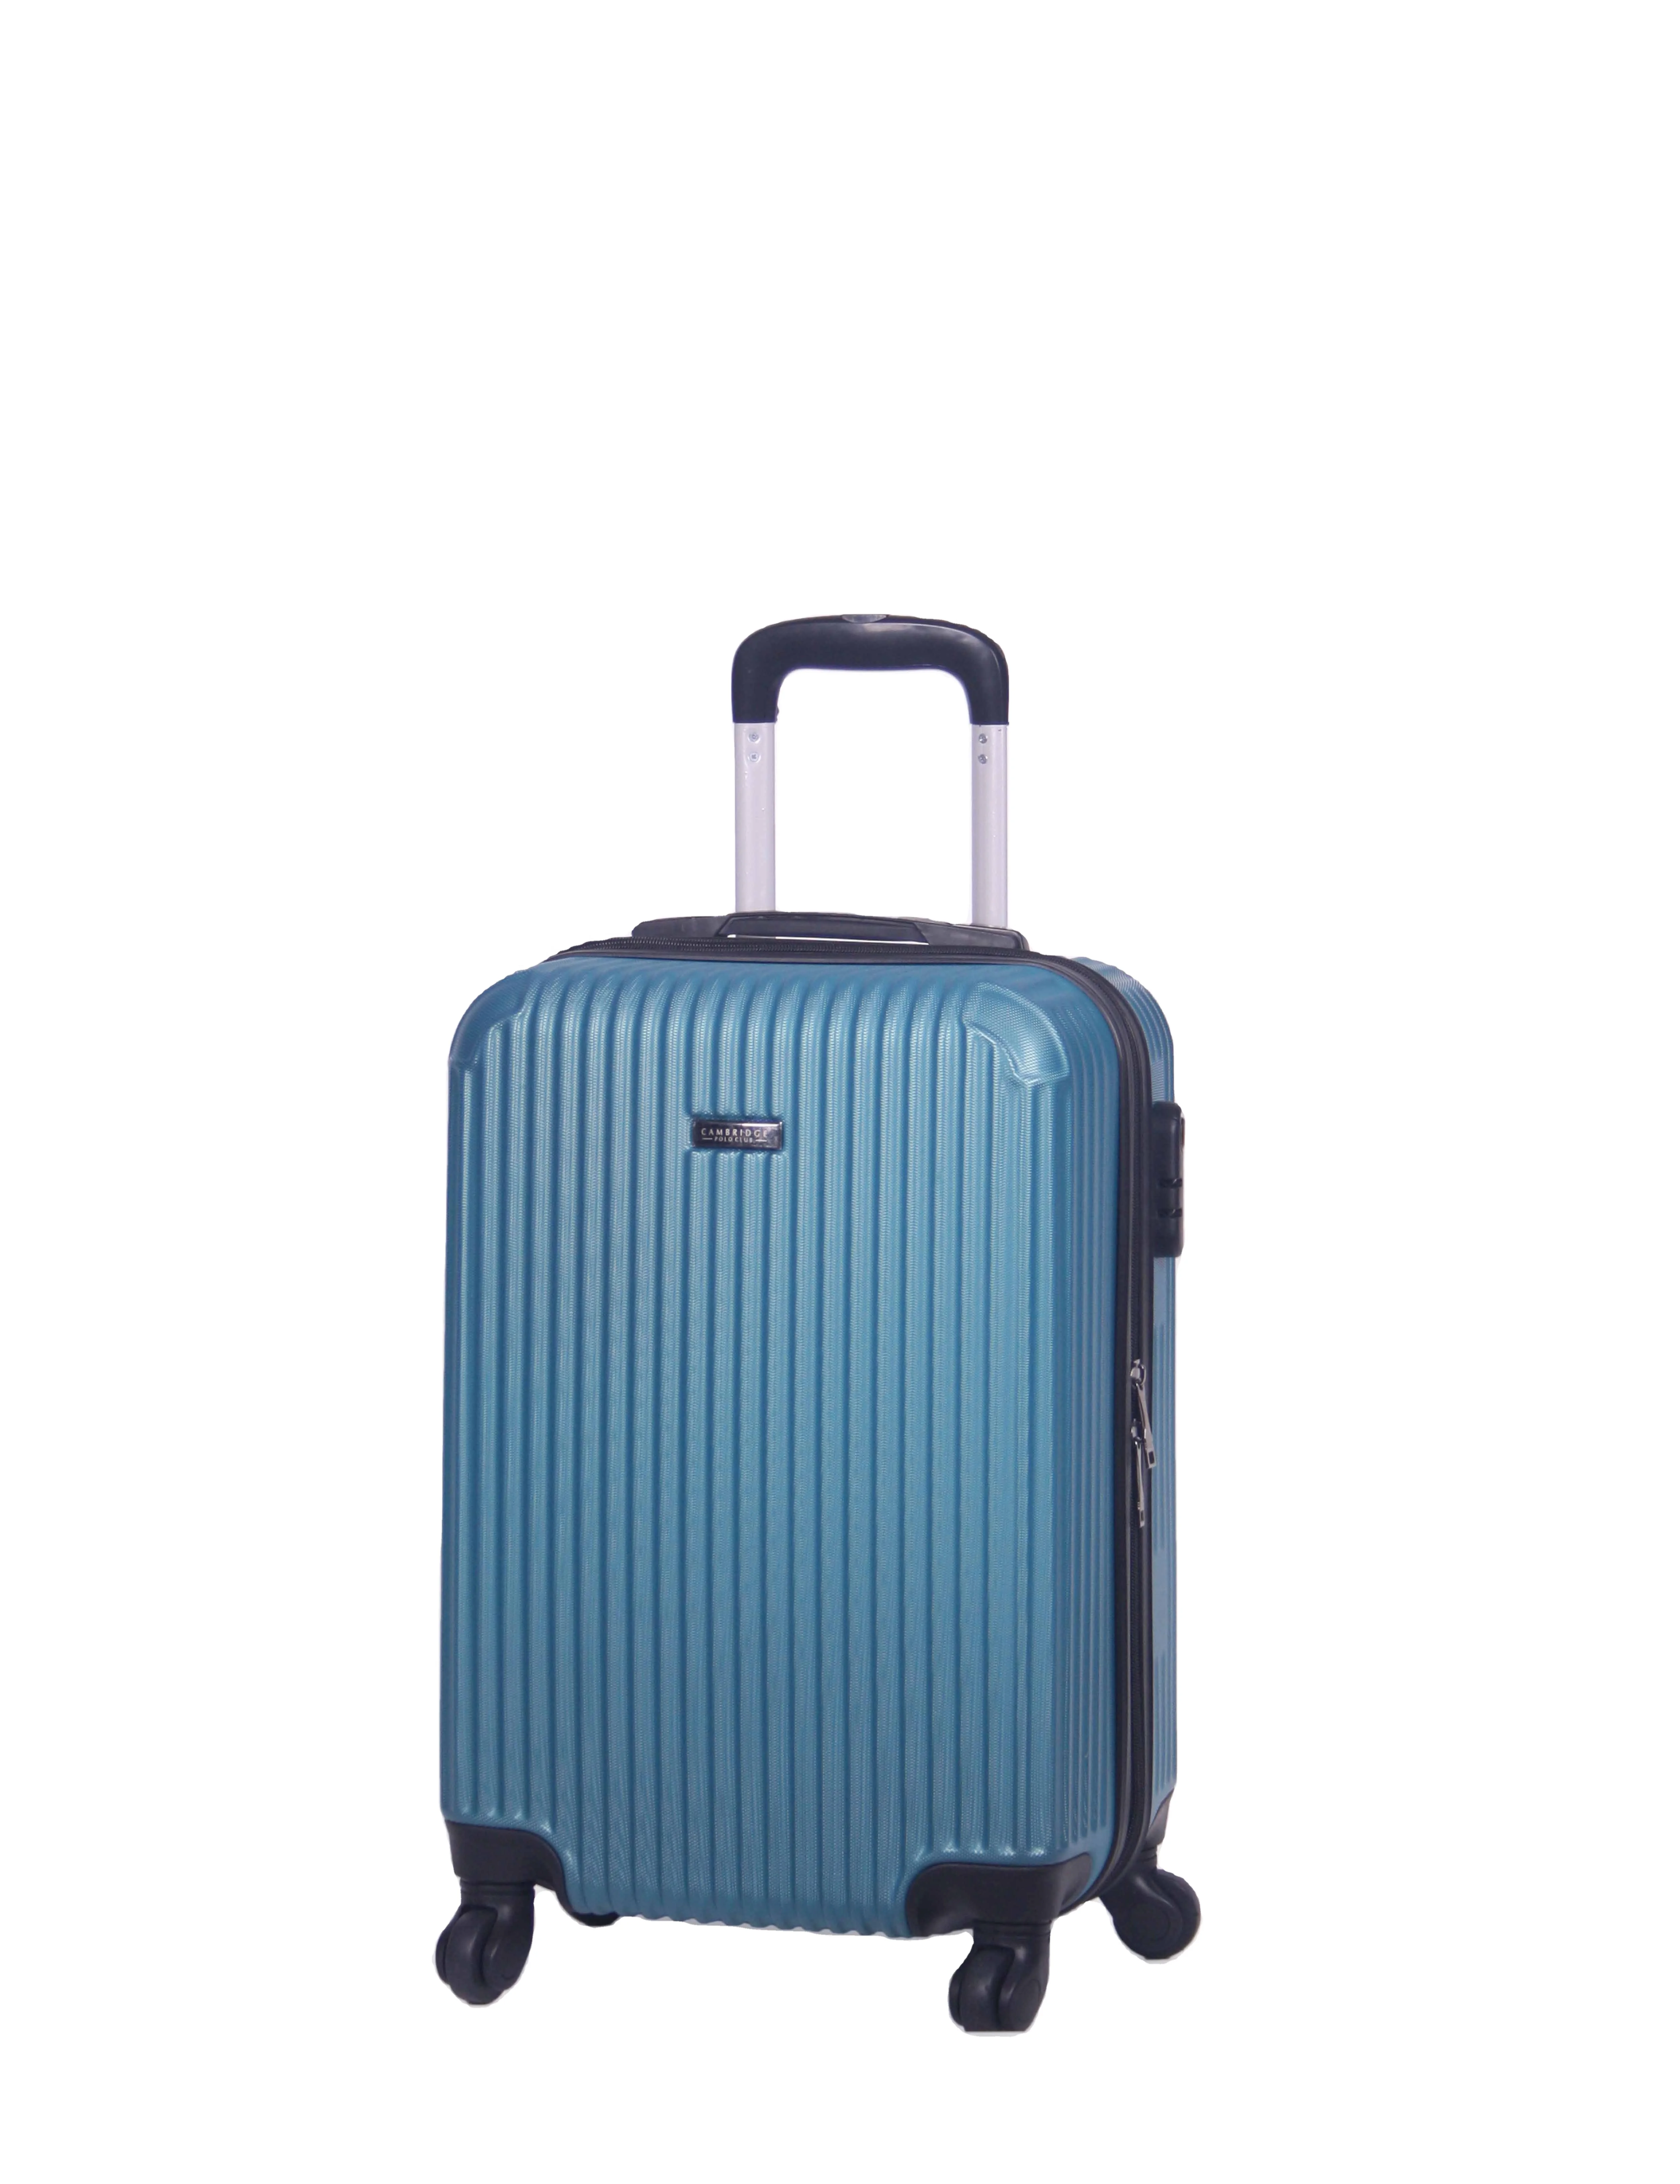 congestie bijkeuken afgewerkt Abs 360 Degree Wheels Trolley Travel Made In Turkey Suitcase Sets Hard  Shell Luggage Valise Koffer Equipaje - Buy Luggage Suitcases Luggage Set  Valise Koffer Maletas Travel Trolley Bag Luggage Set Travel